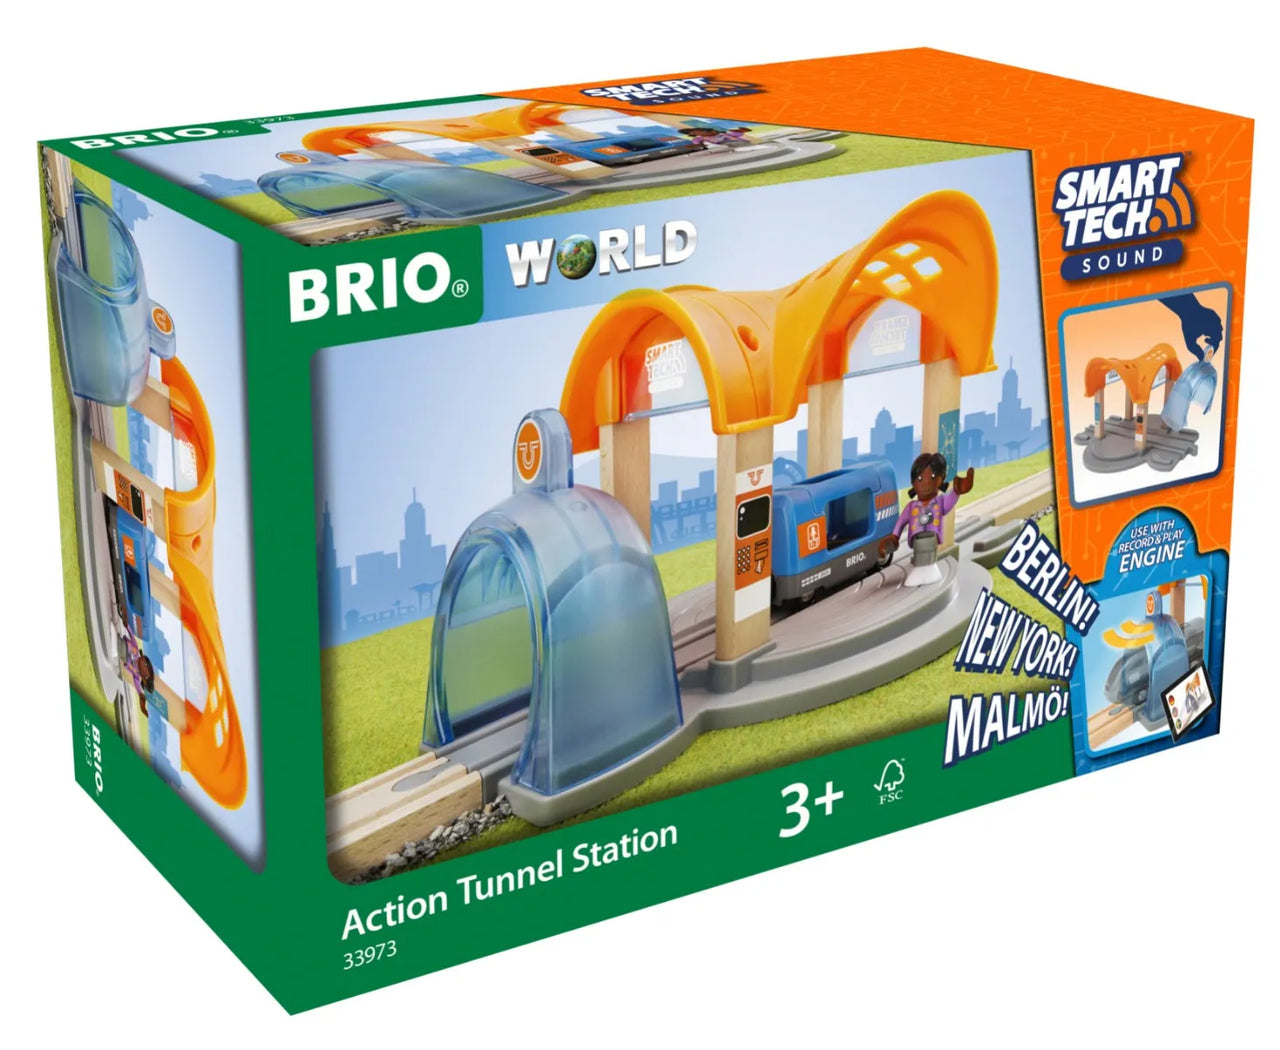 Brio World - Smart Tech Sound Action Tunnel Station